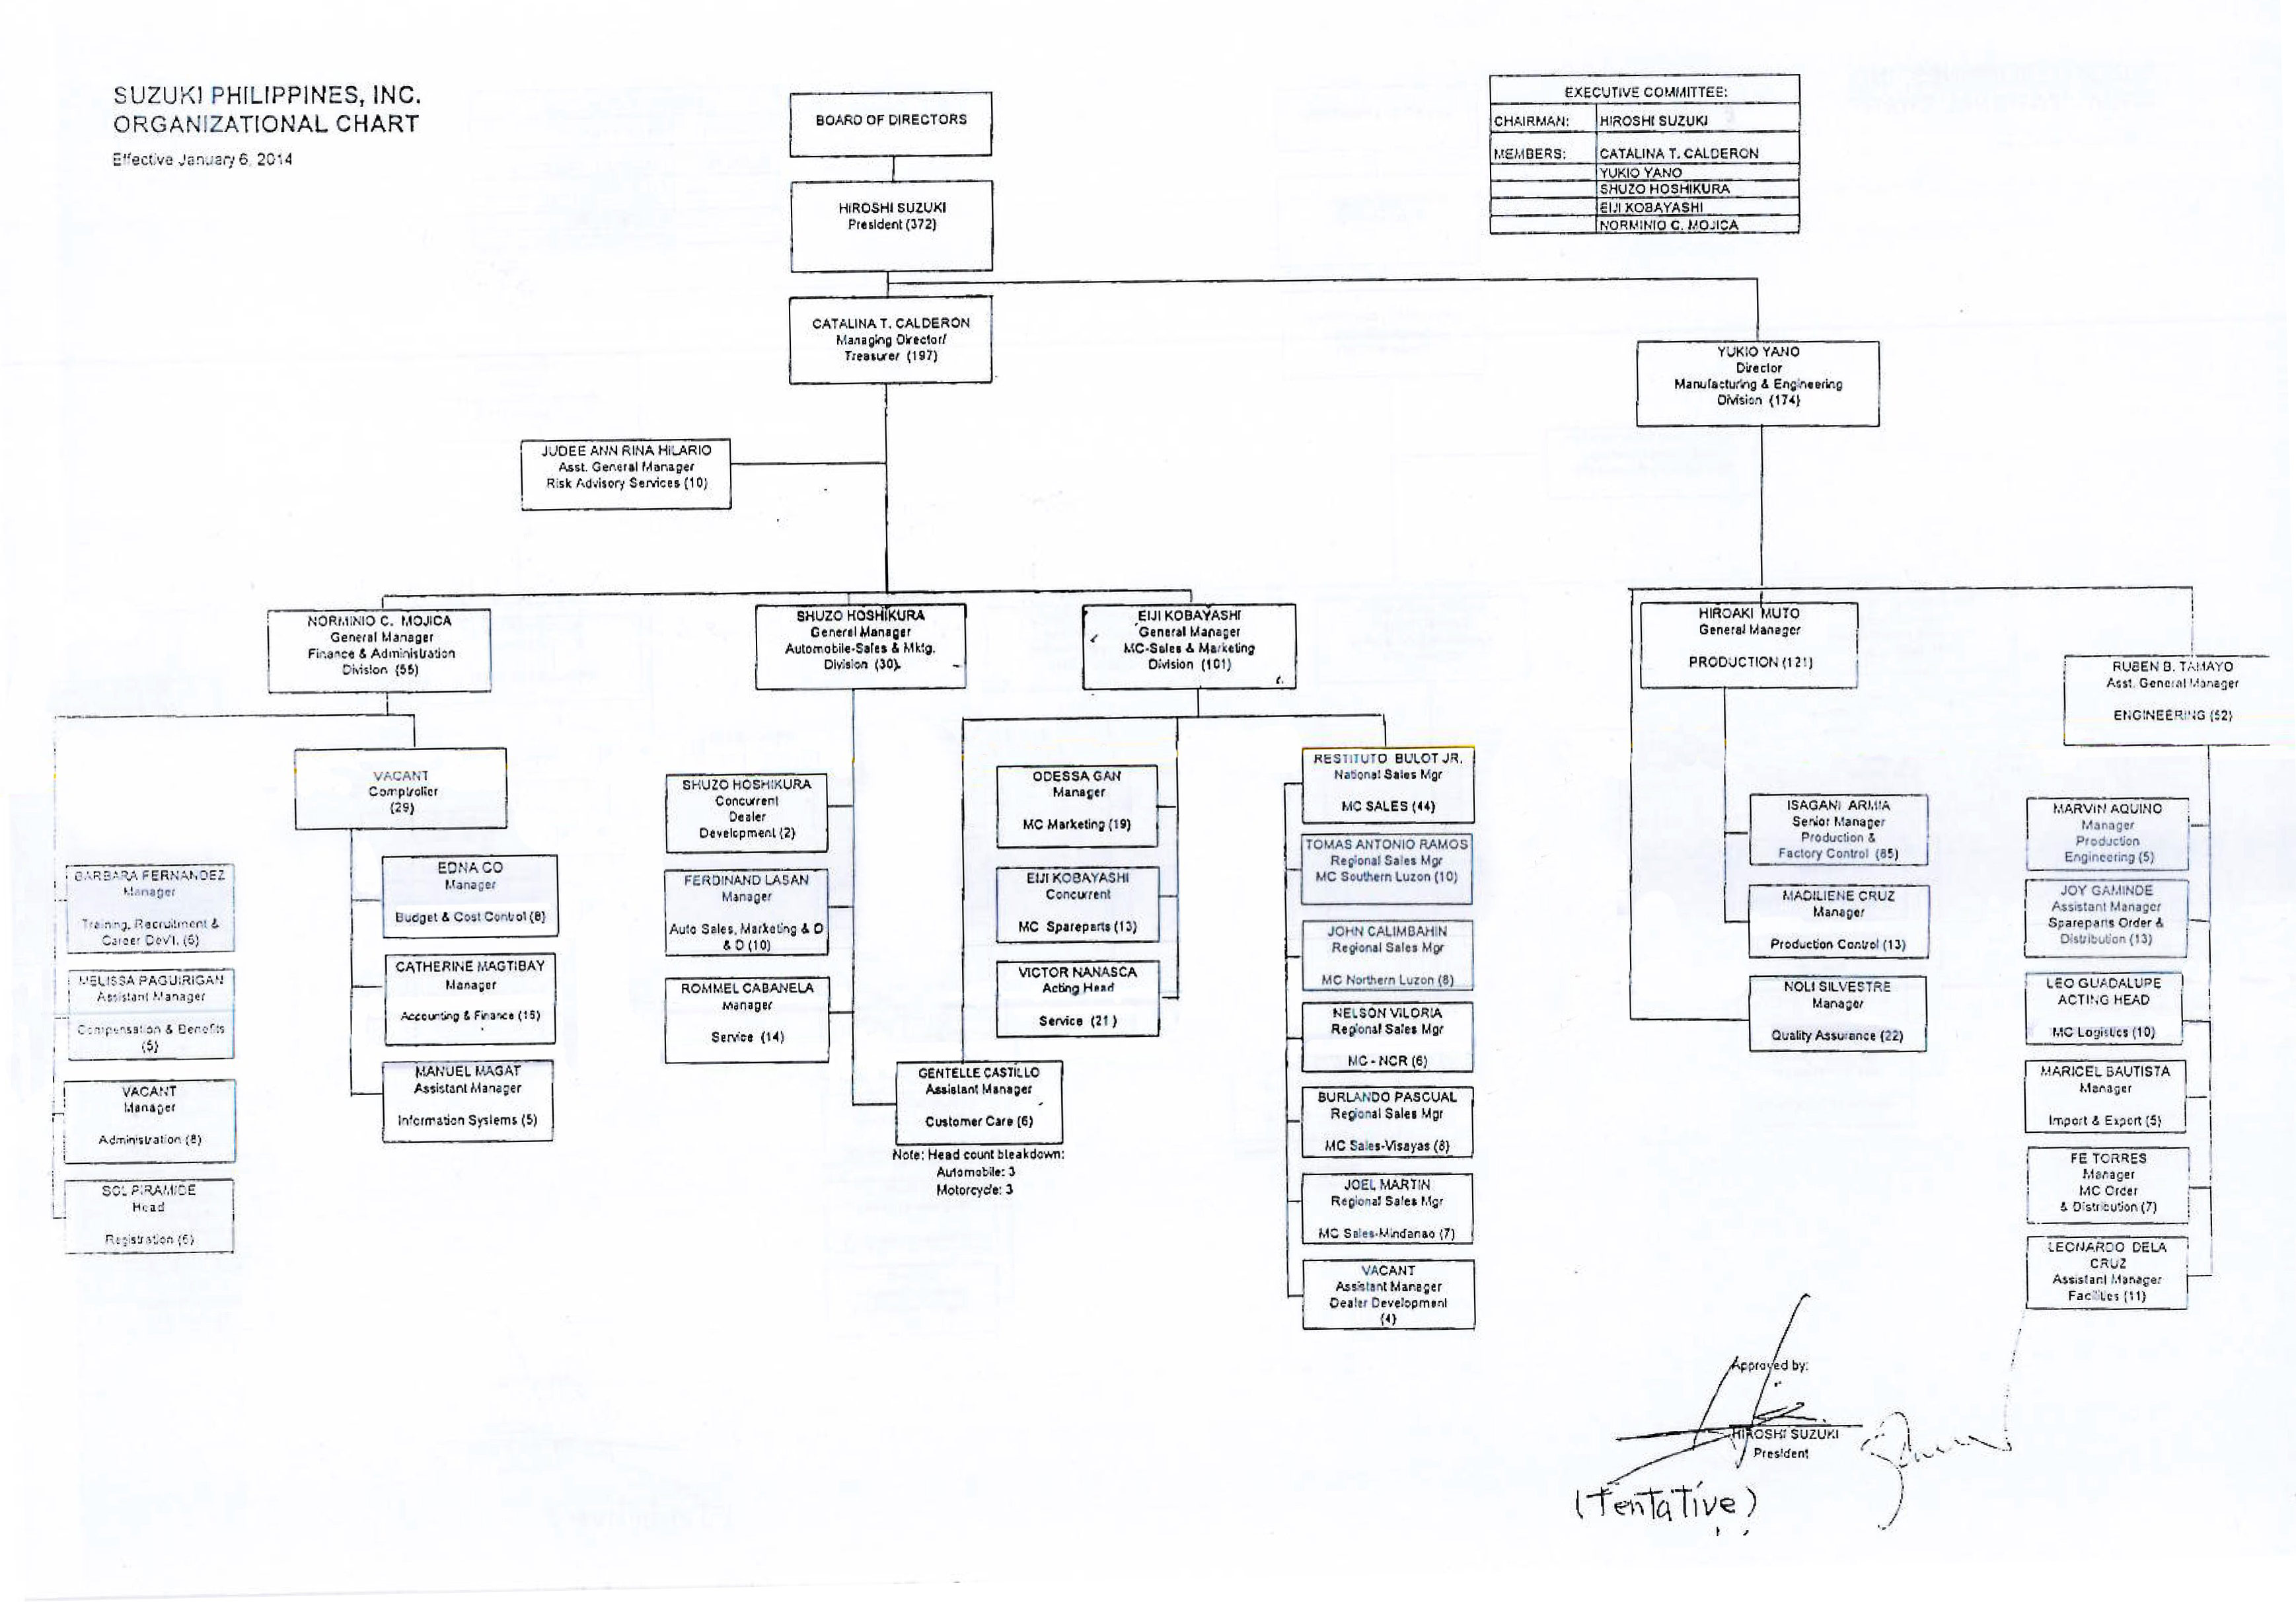 Honda organisation structure